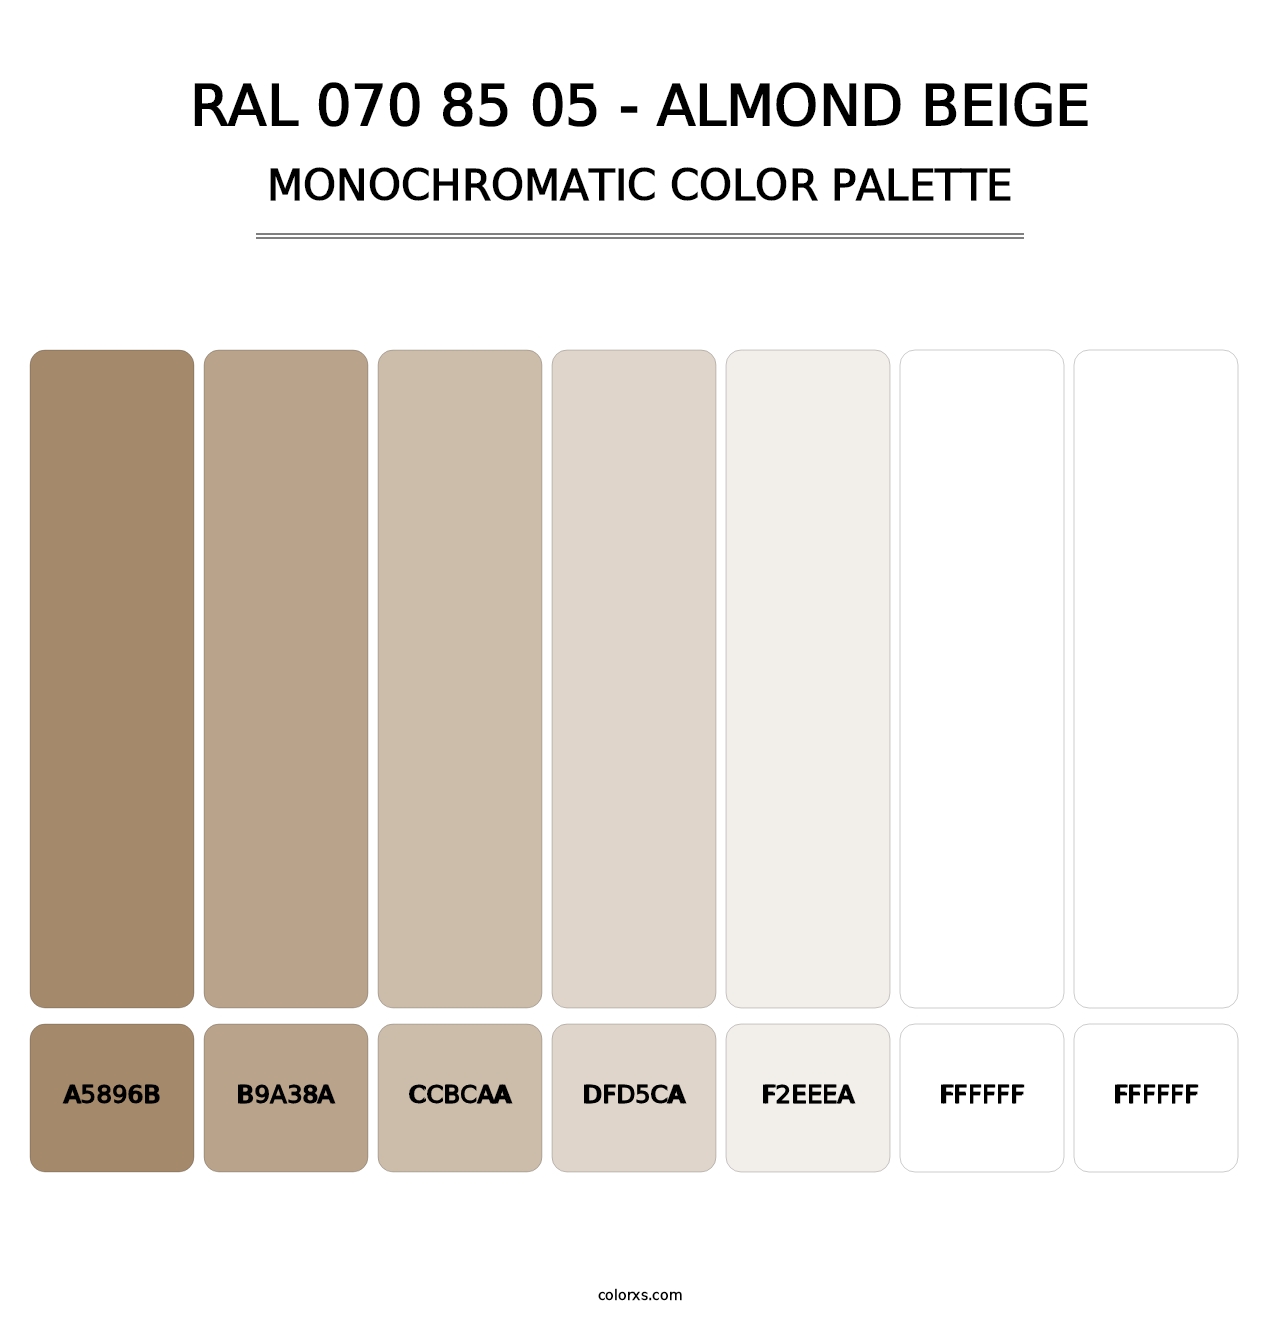 RAL 070 85 05 - Almond Beige - Monochromatic Color Palette